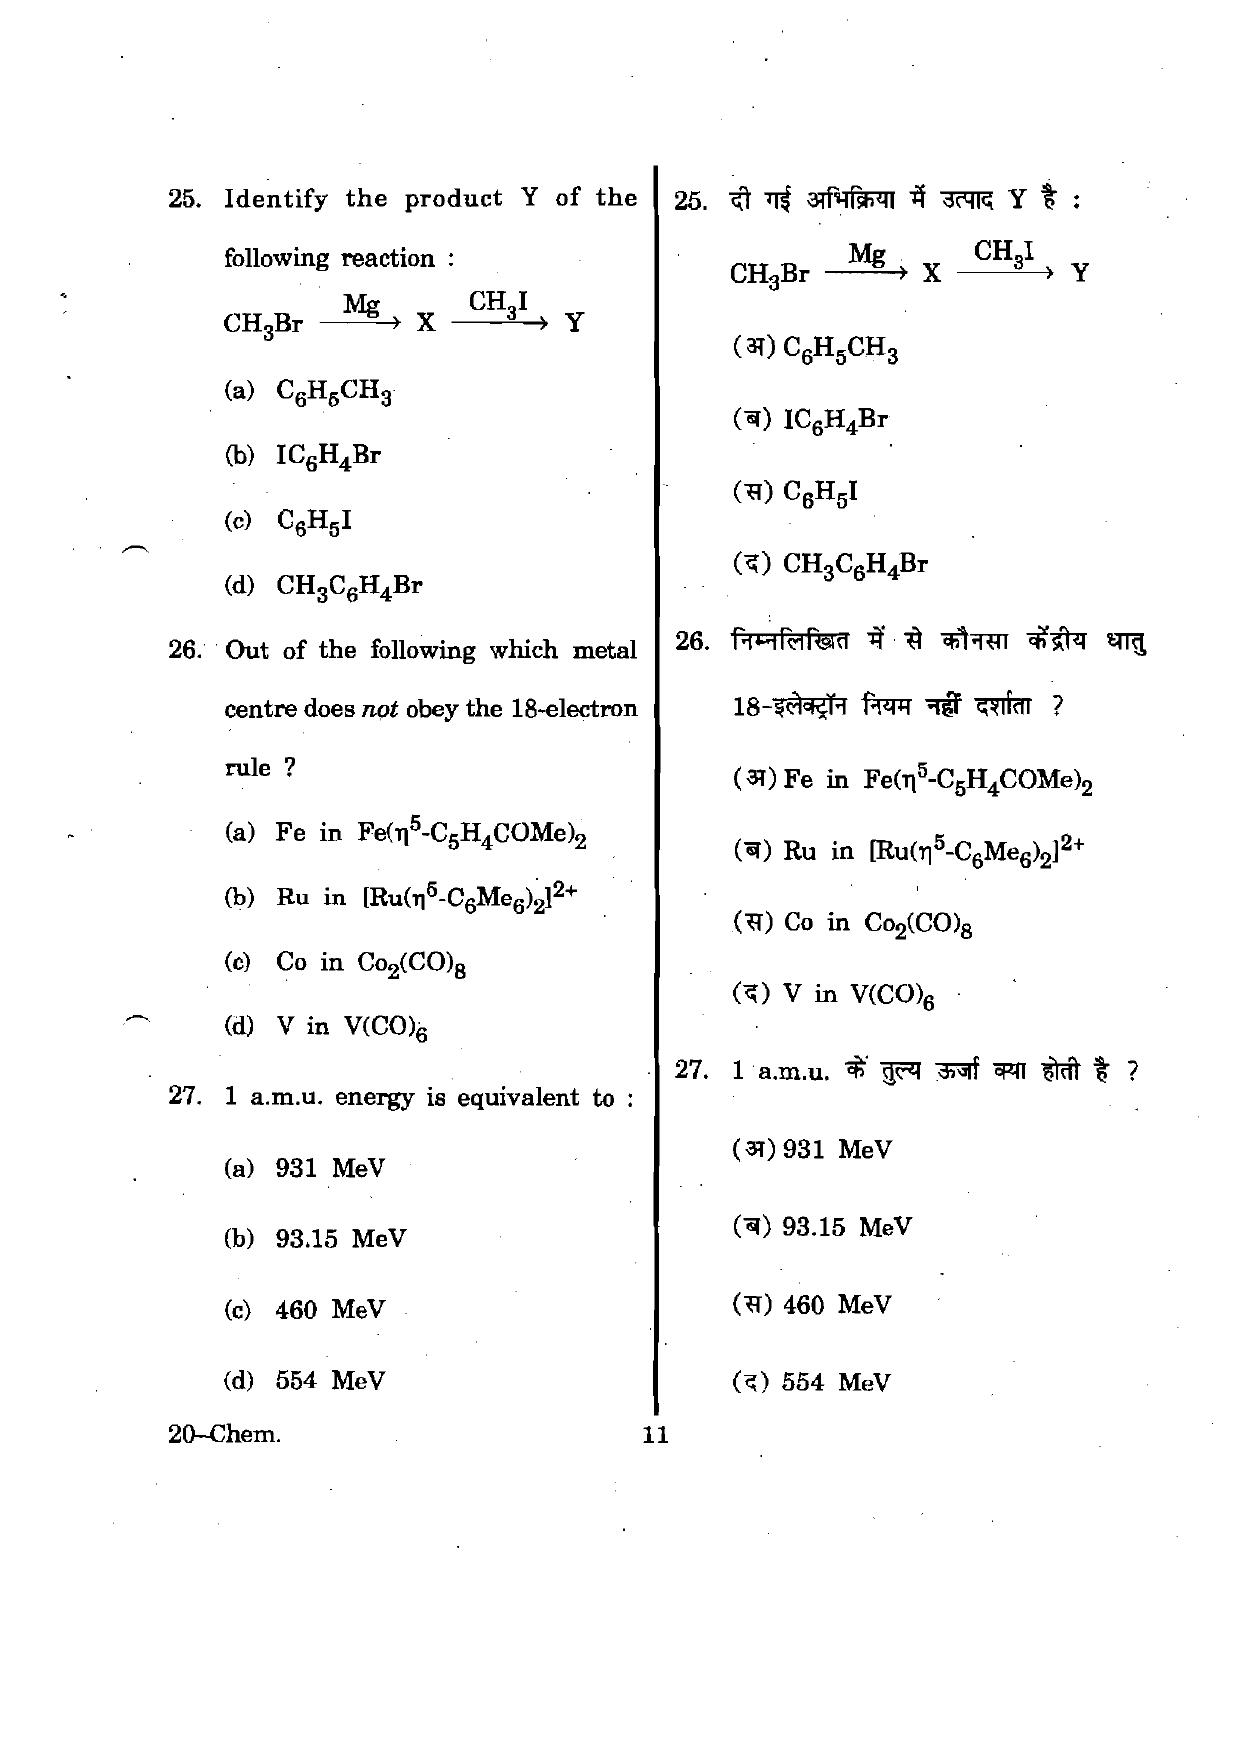 URATPG Chemistry 2012 Question Paper - Page 11